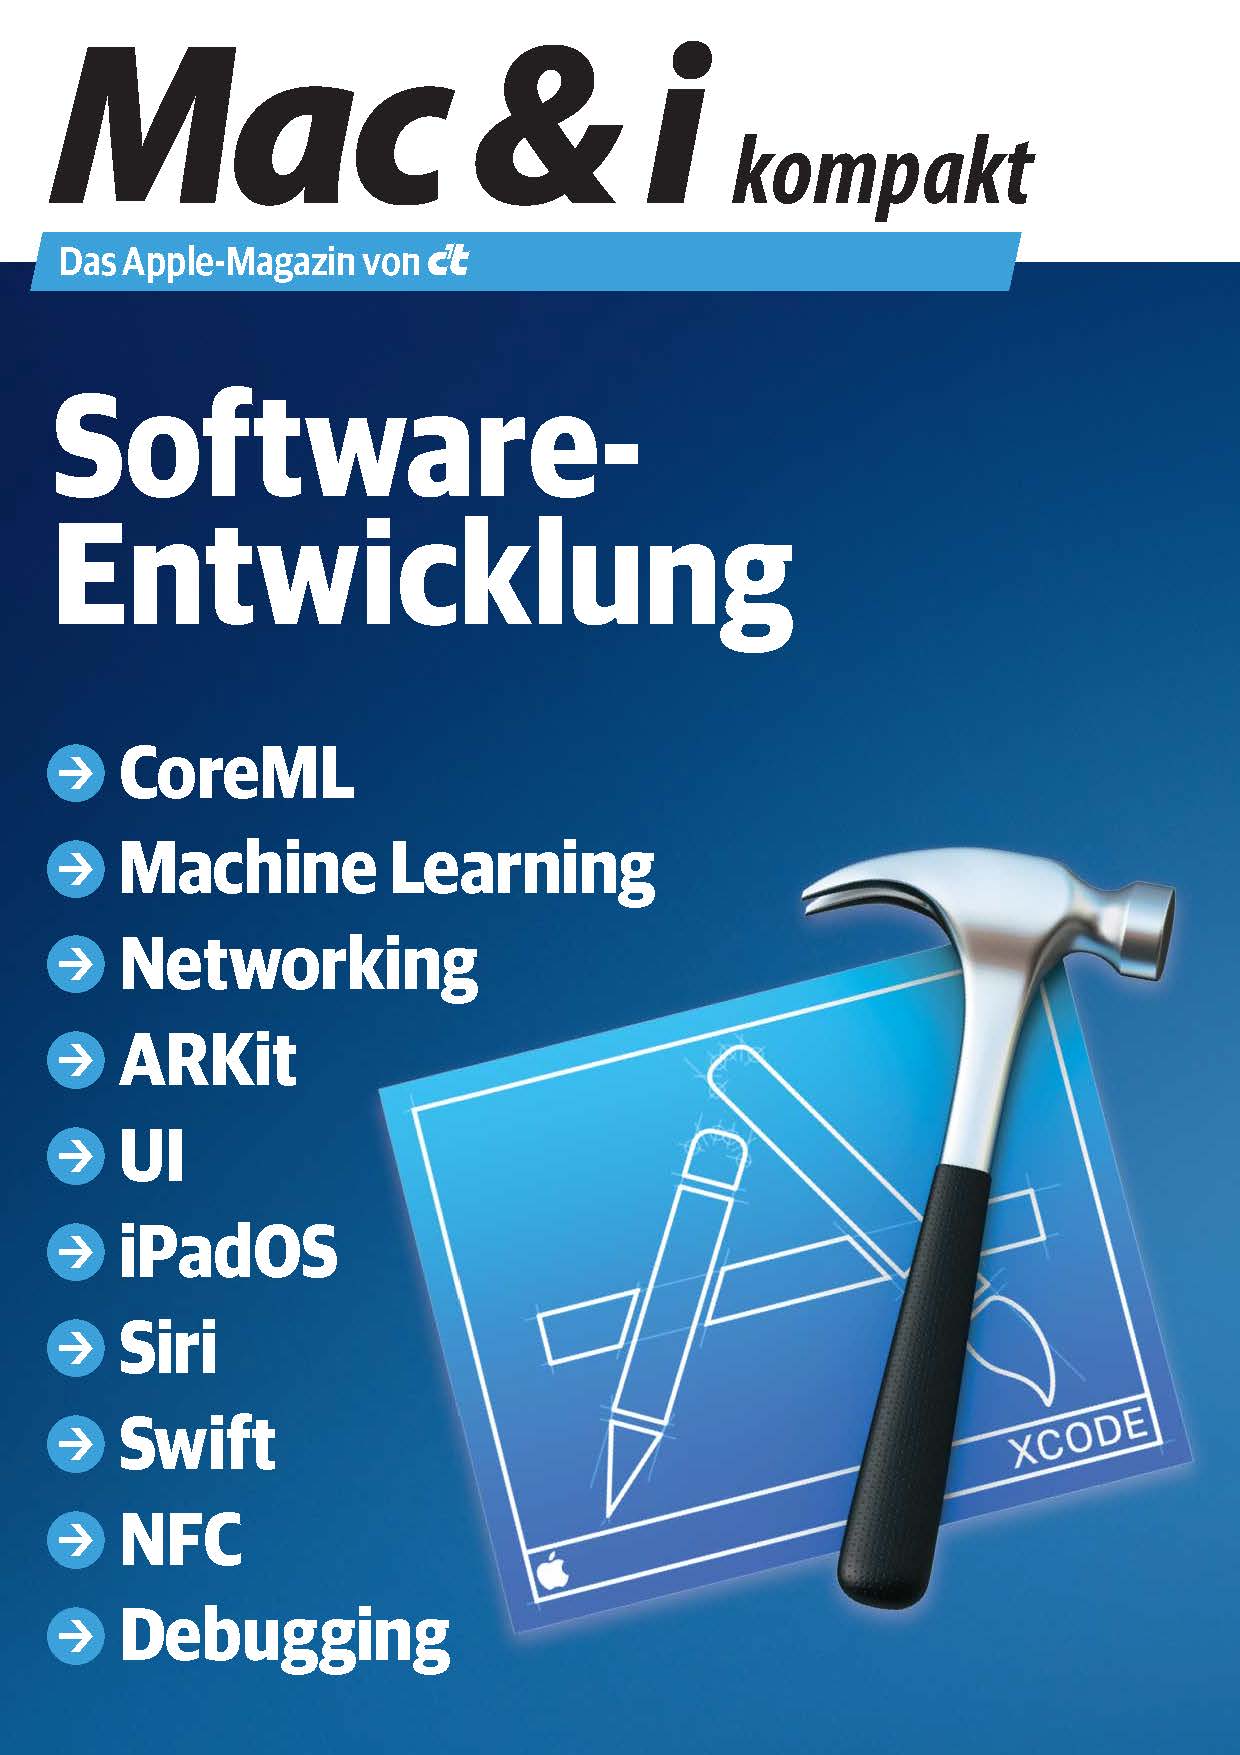 Mac & i kompakt - Software-Entwicklung (PDF)